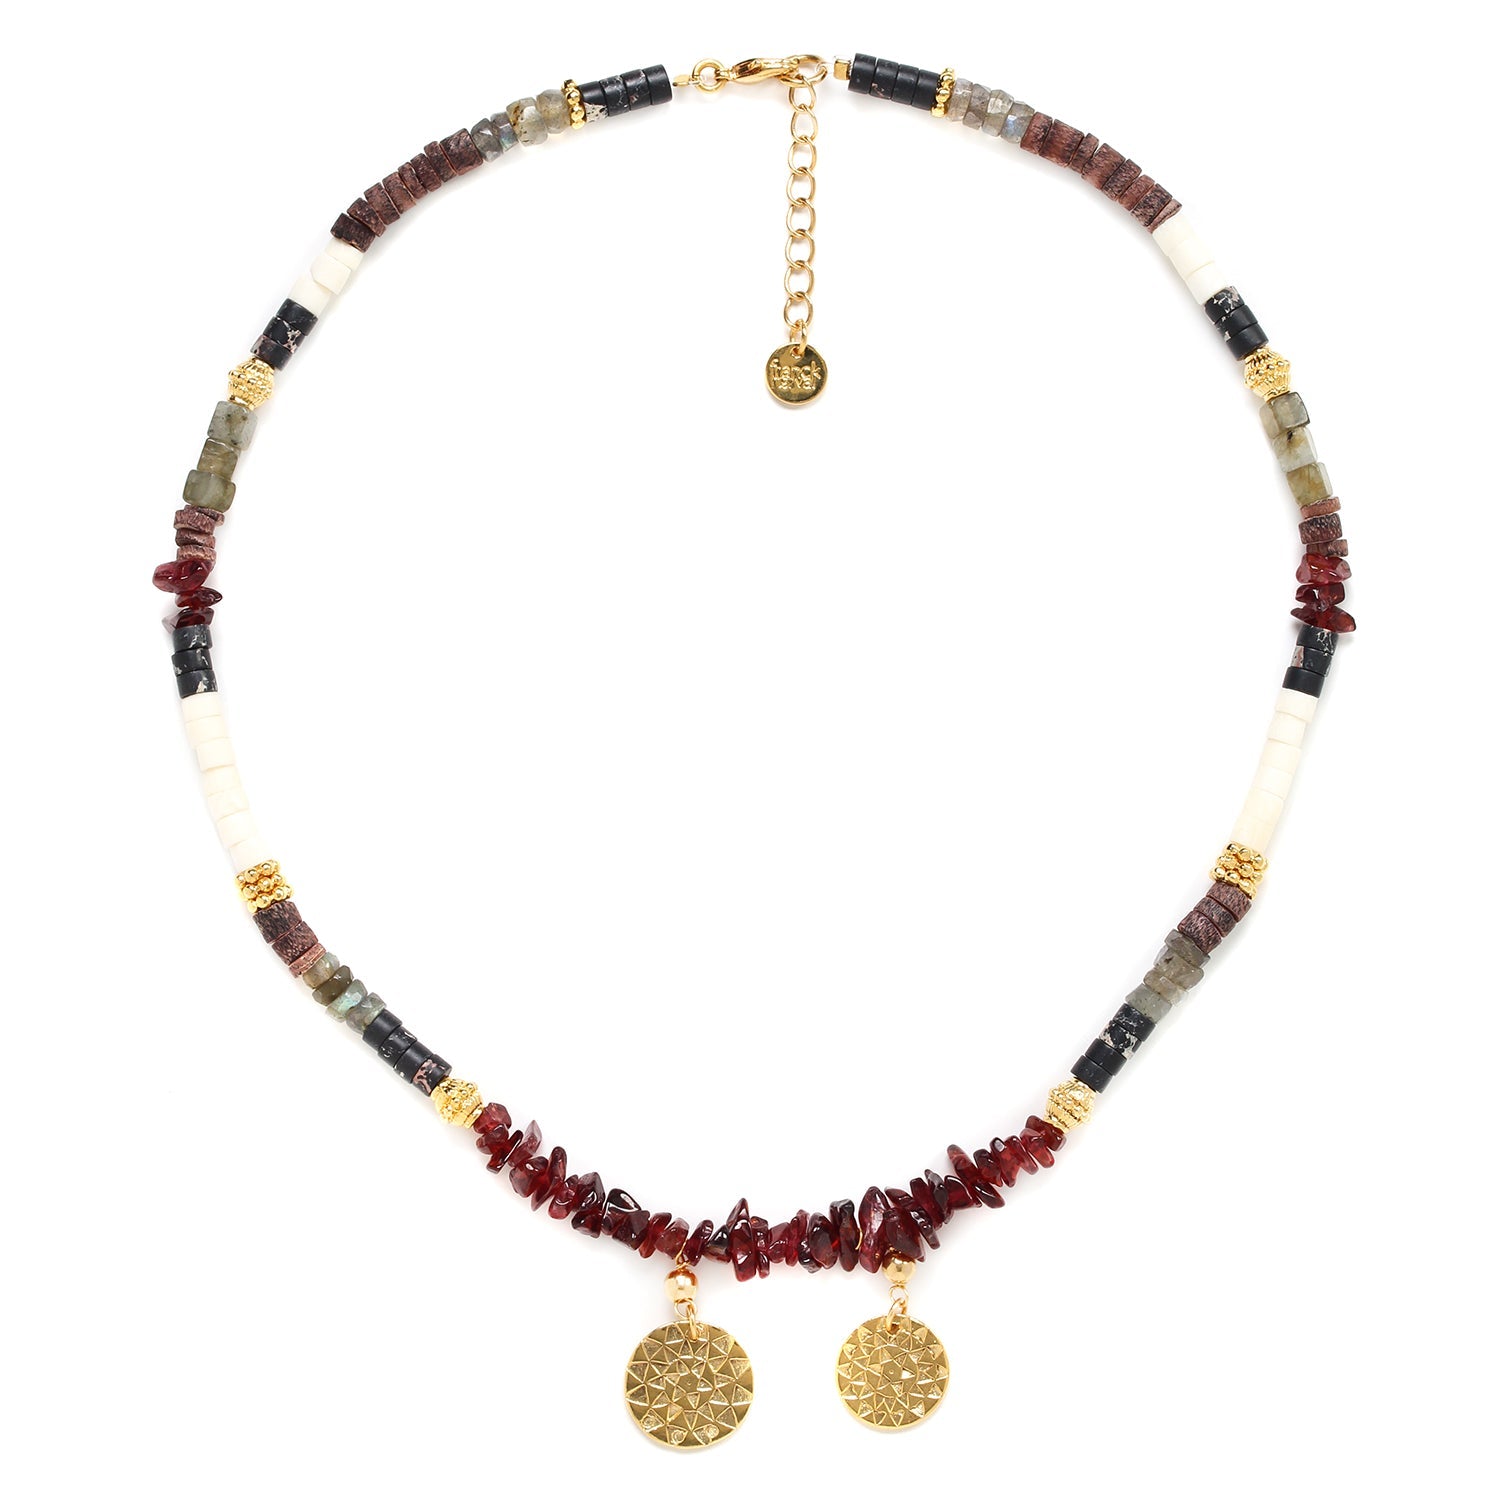 Kara Necklace - The Nancy Smillie Shop - Art, Jewellery & Designer Gifts Glasgow